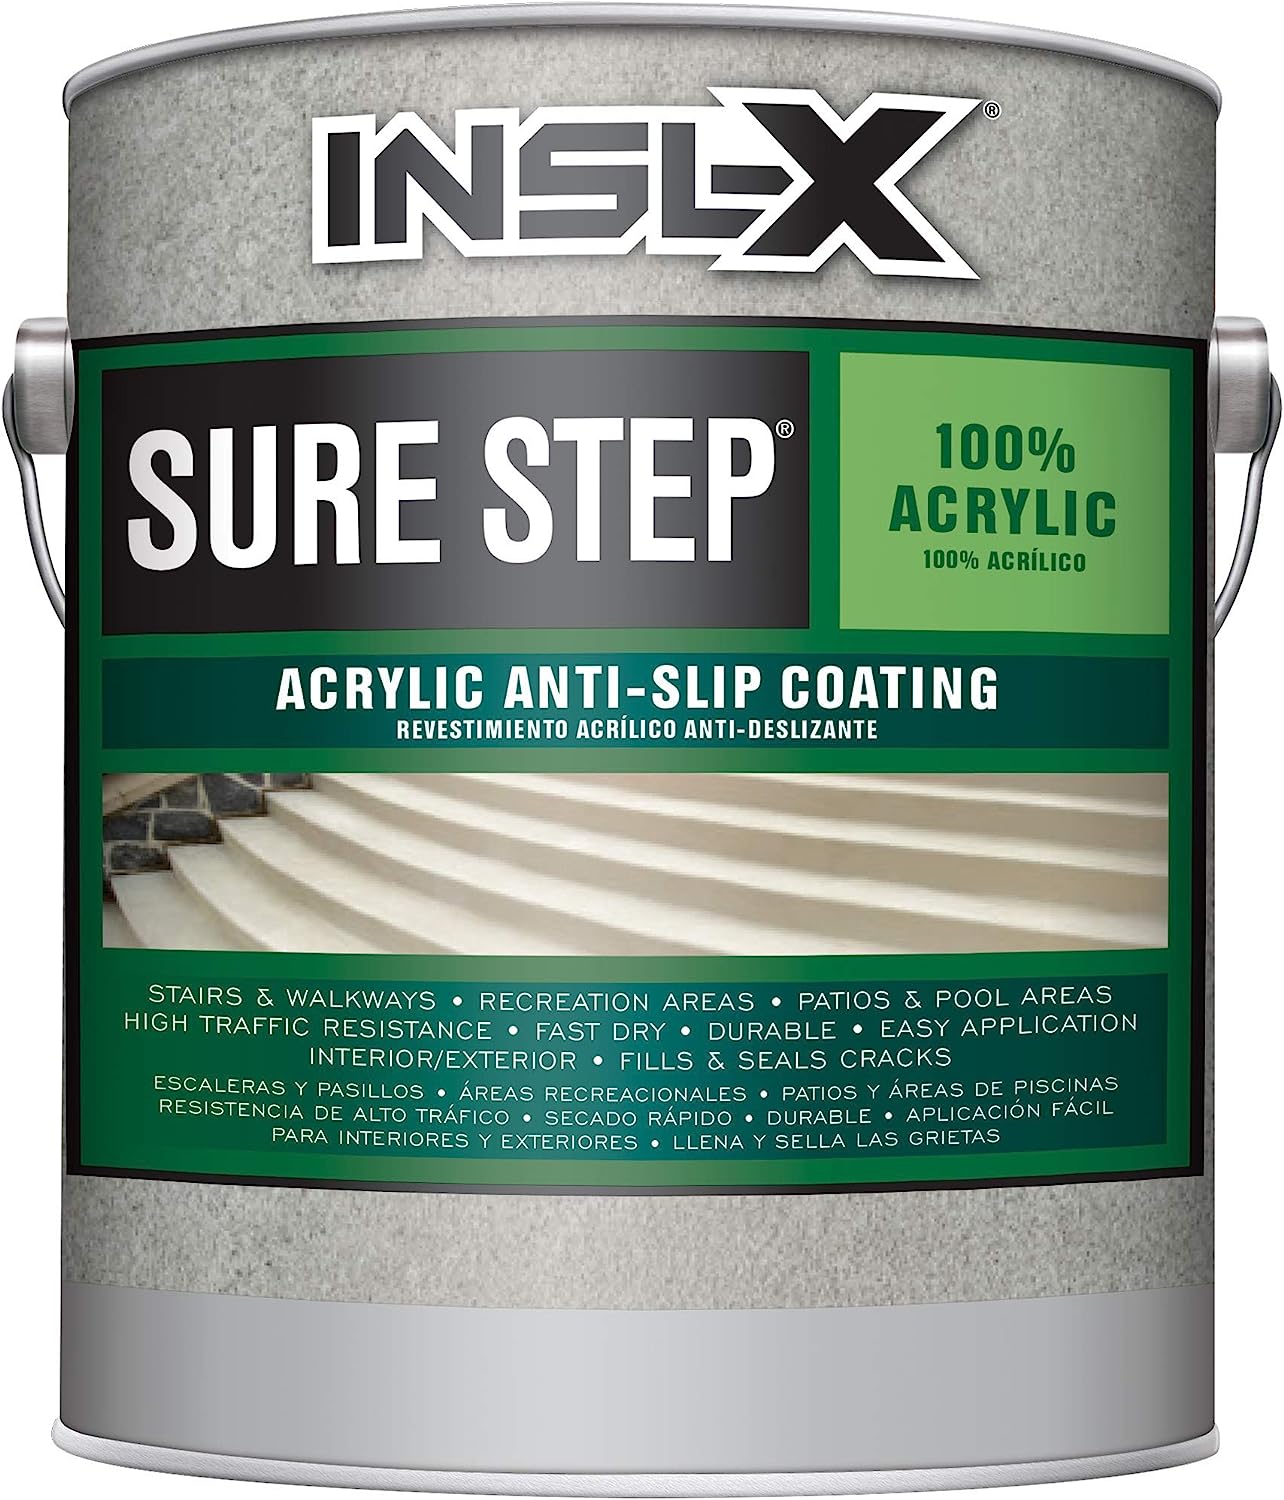 INSL-X SU030809A-01 Sure Step Acrylic Anti-Slip [...]